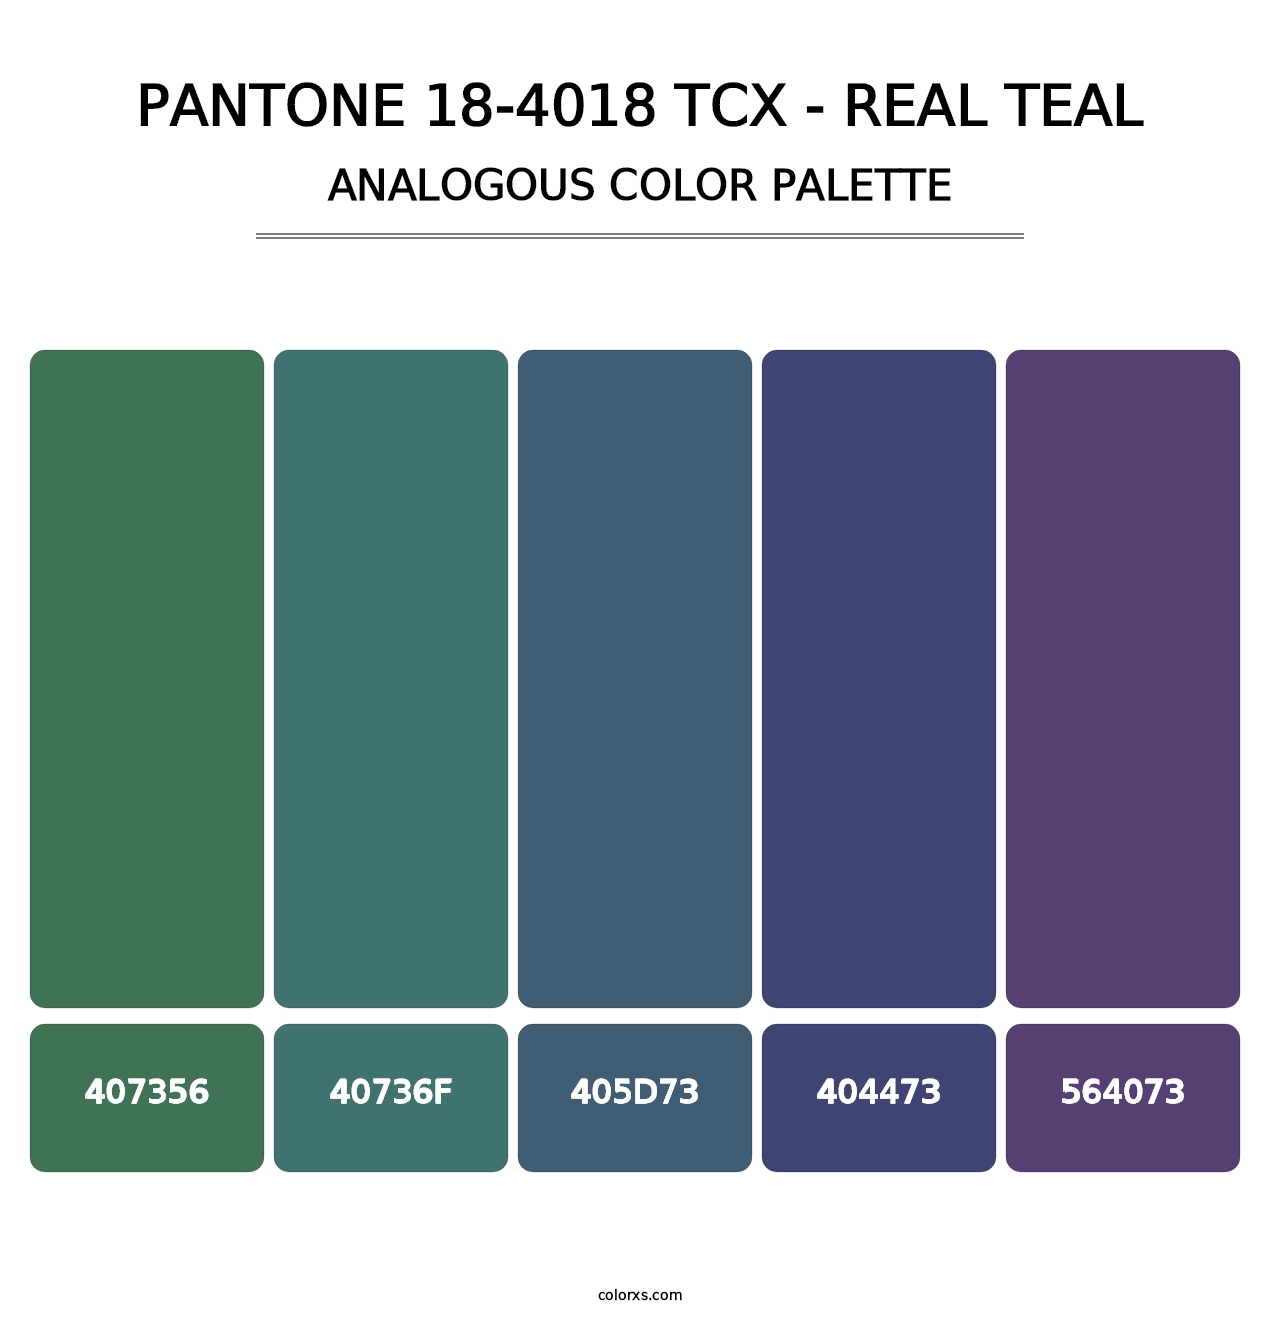 PANTONE 18-4018 TCX - Real Teal - Analogous Color Palette